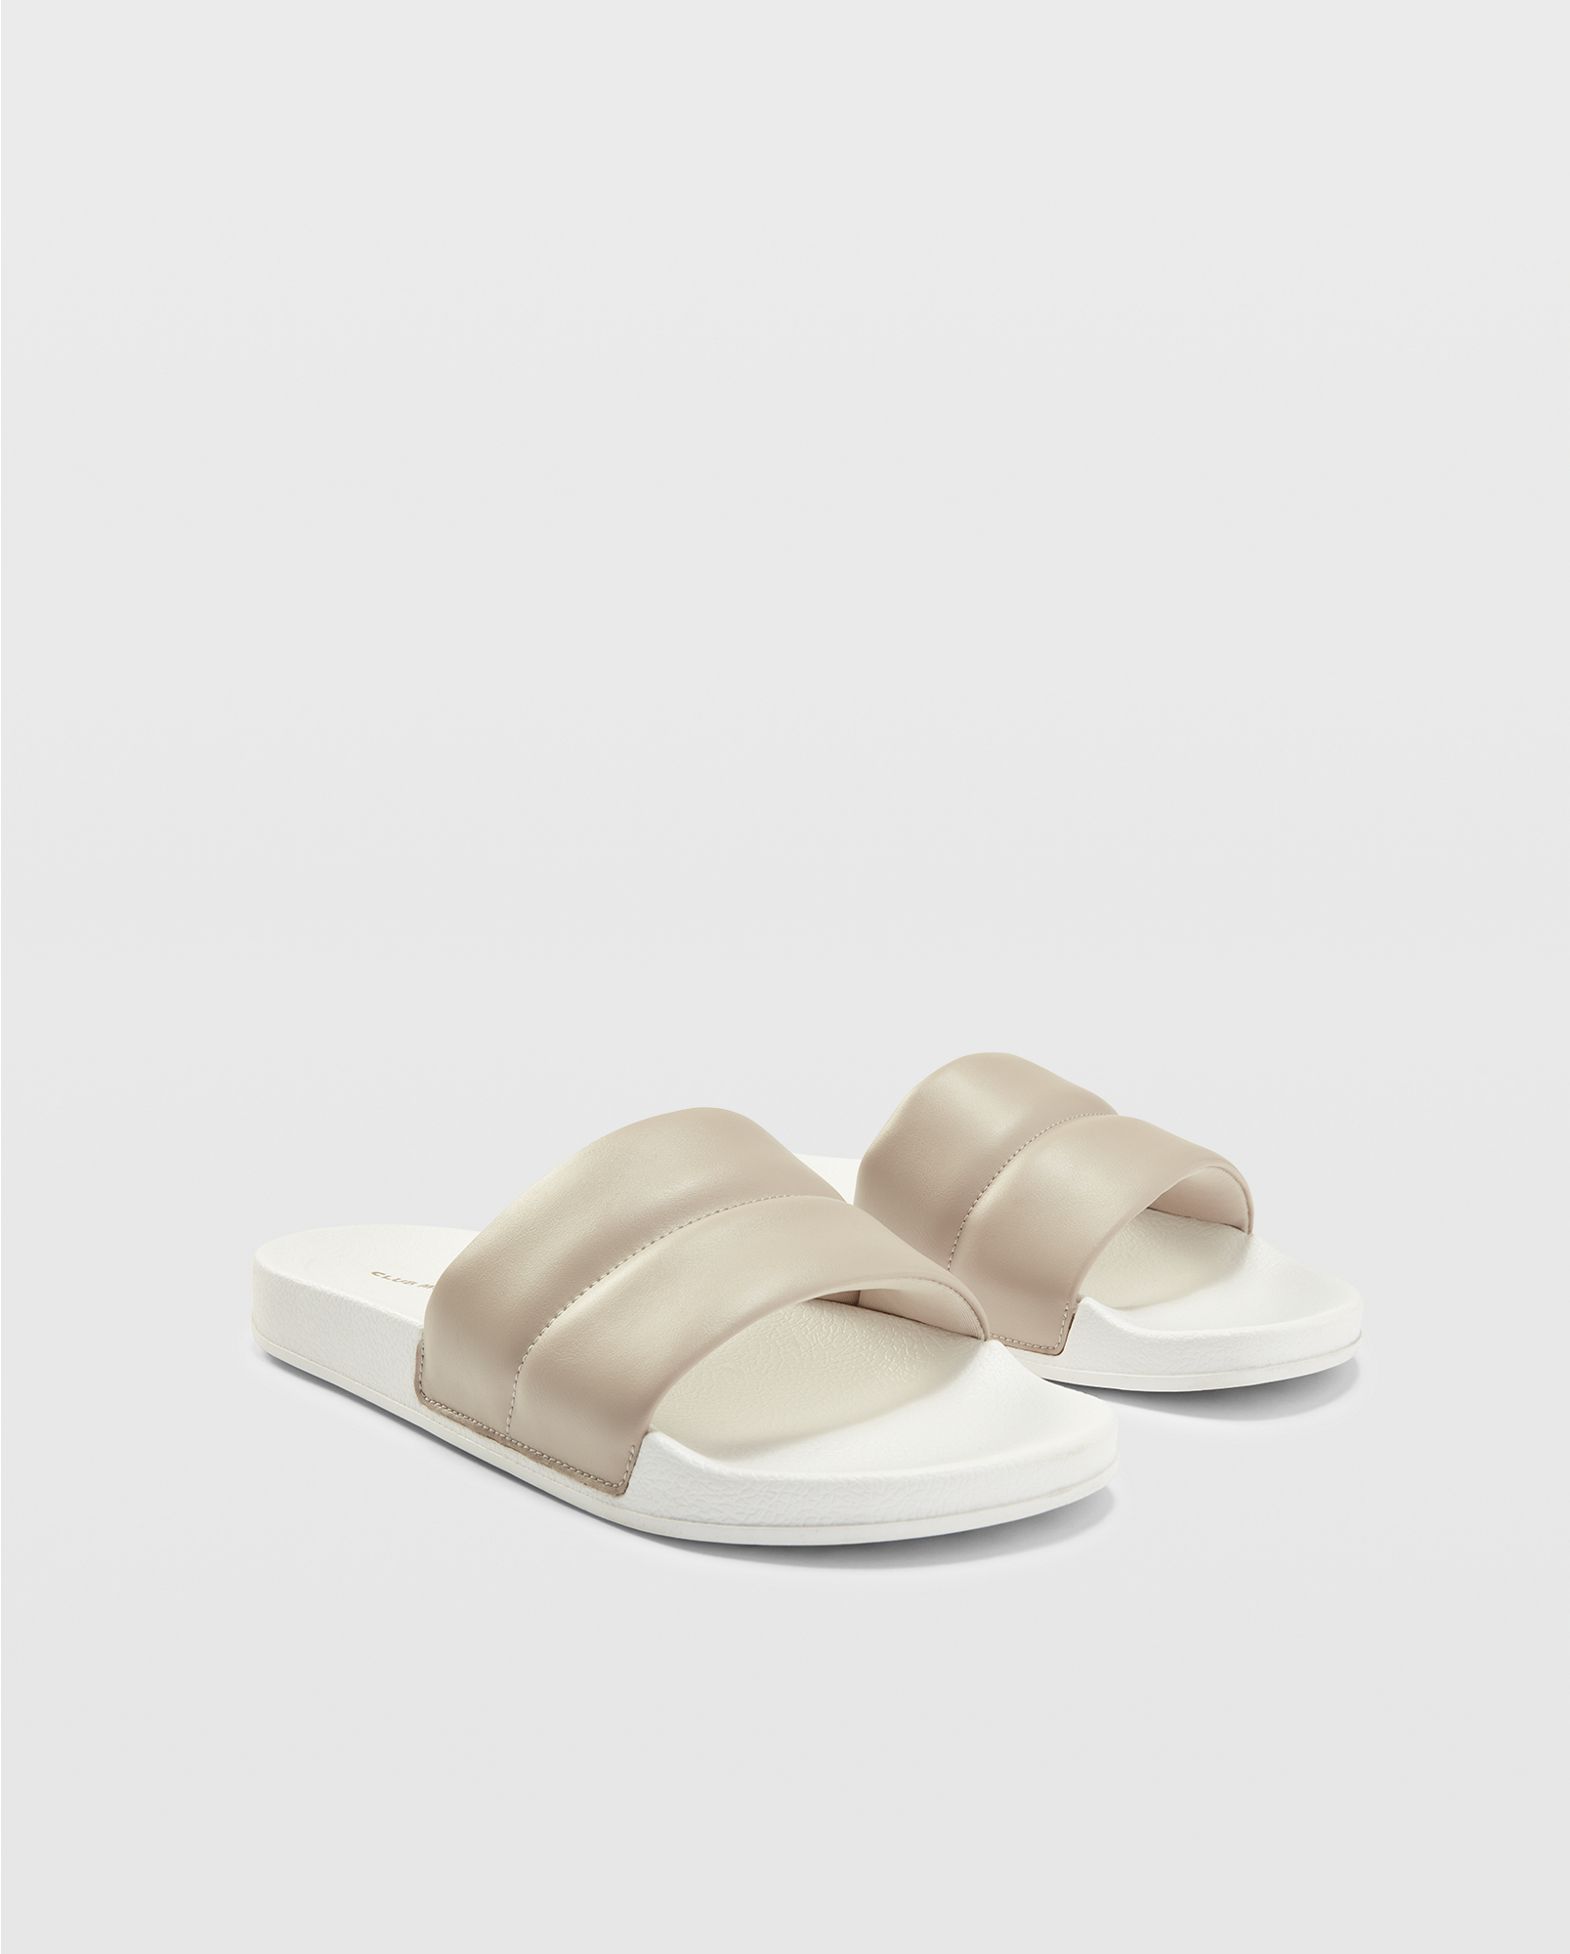 Stylish Sandals for Summer - V Magazine